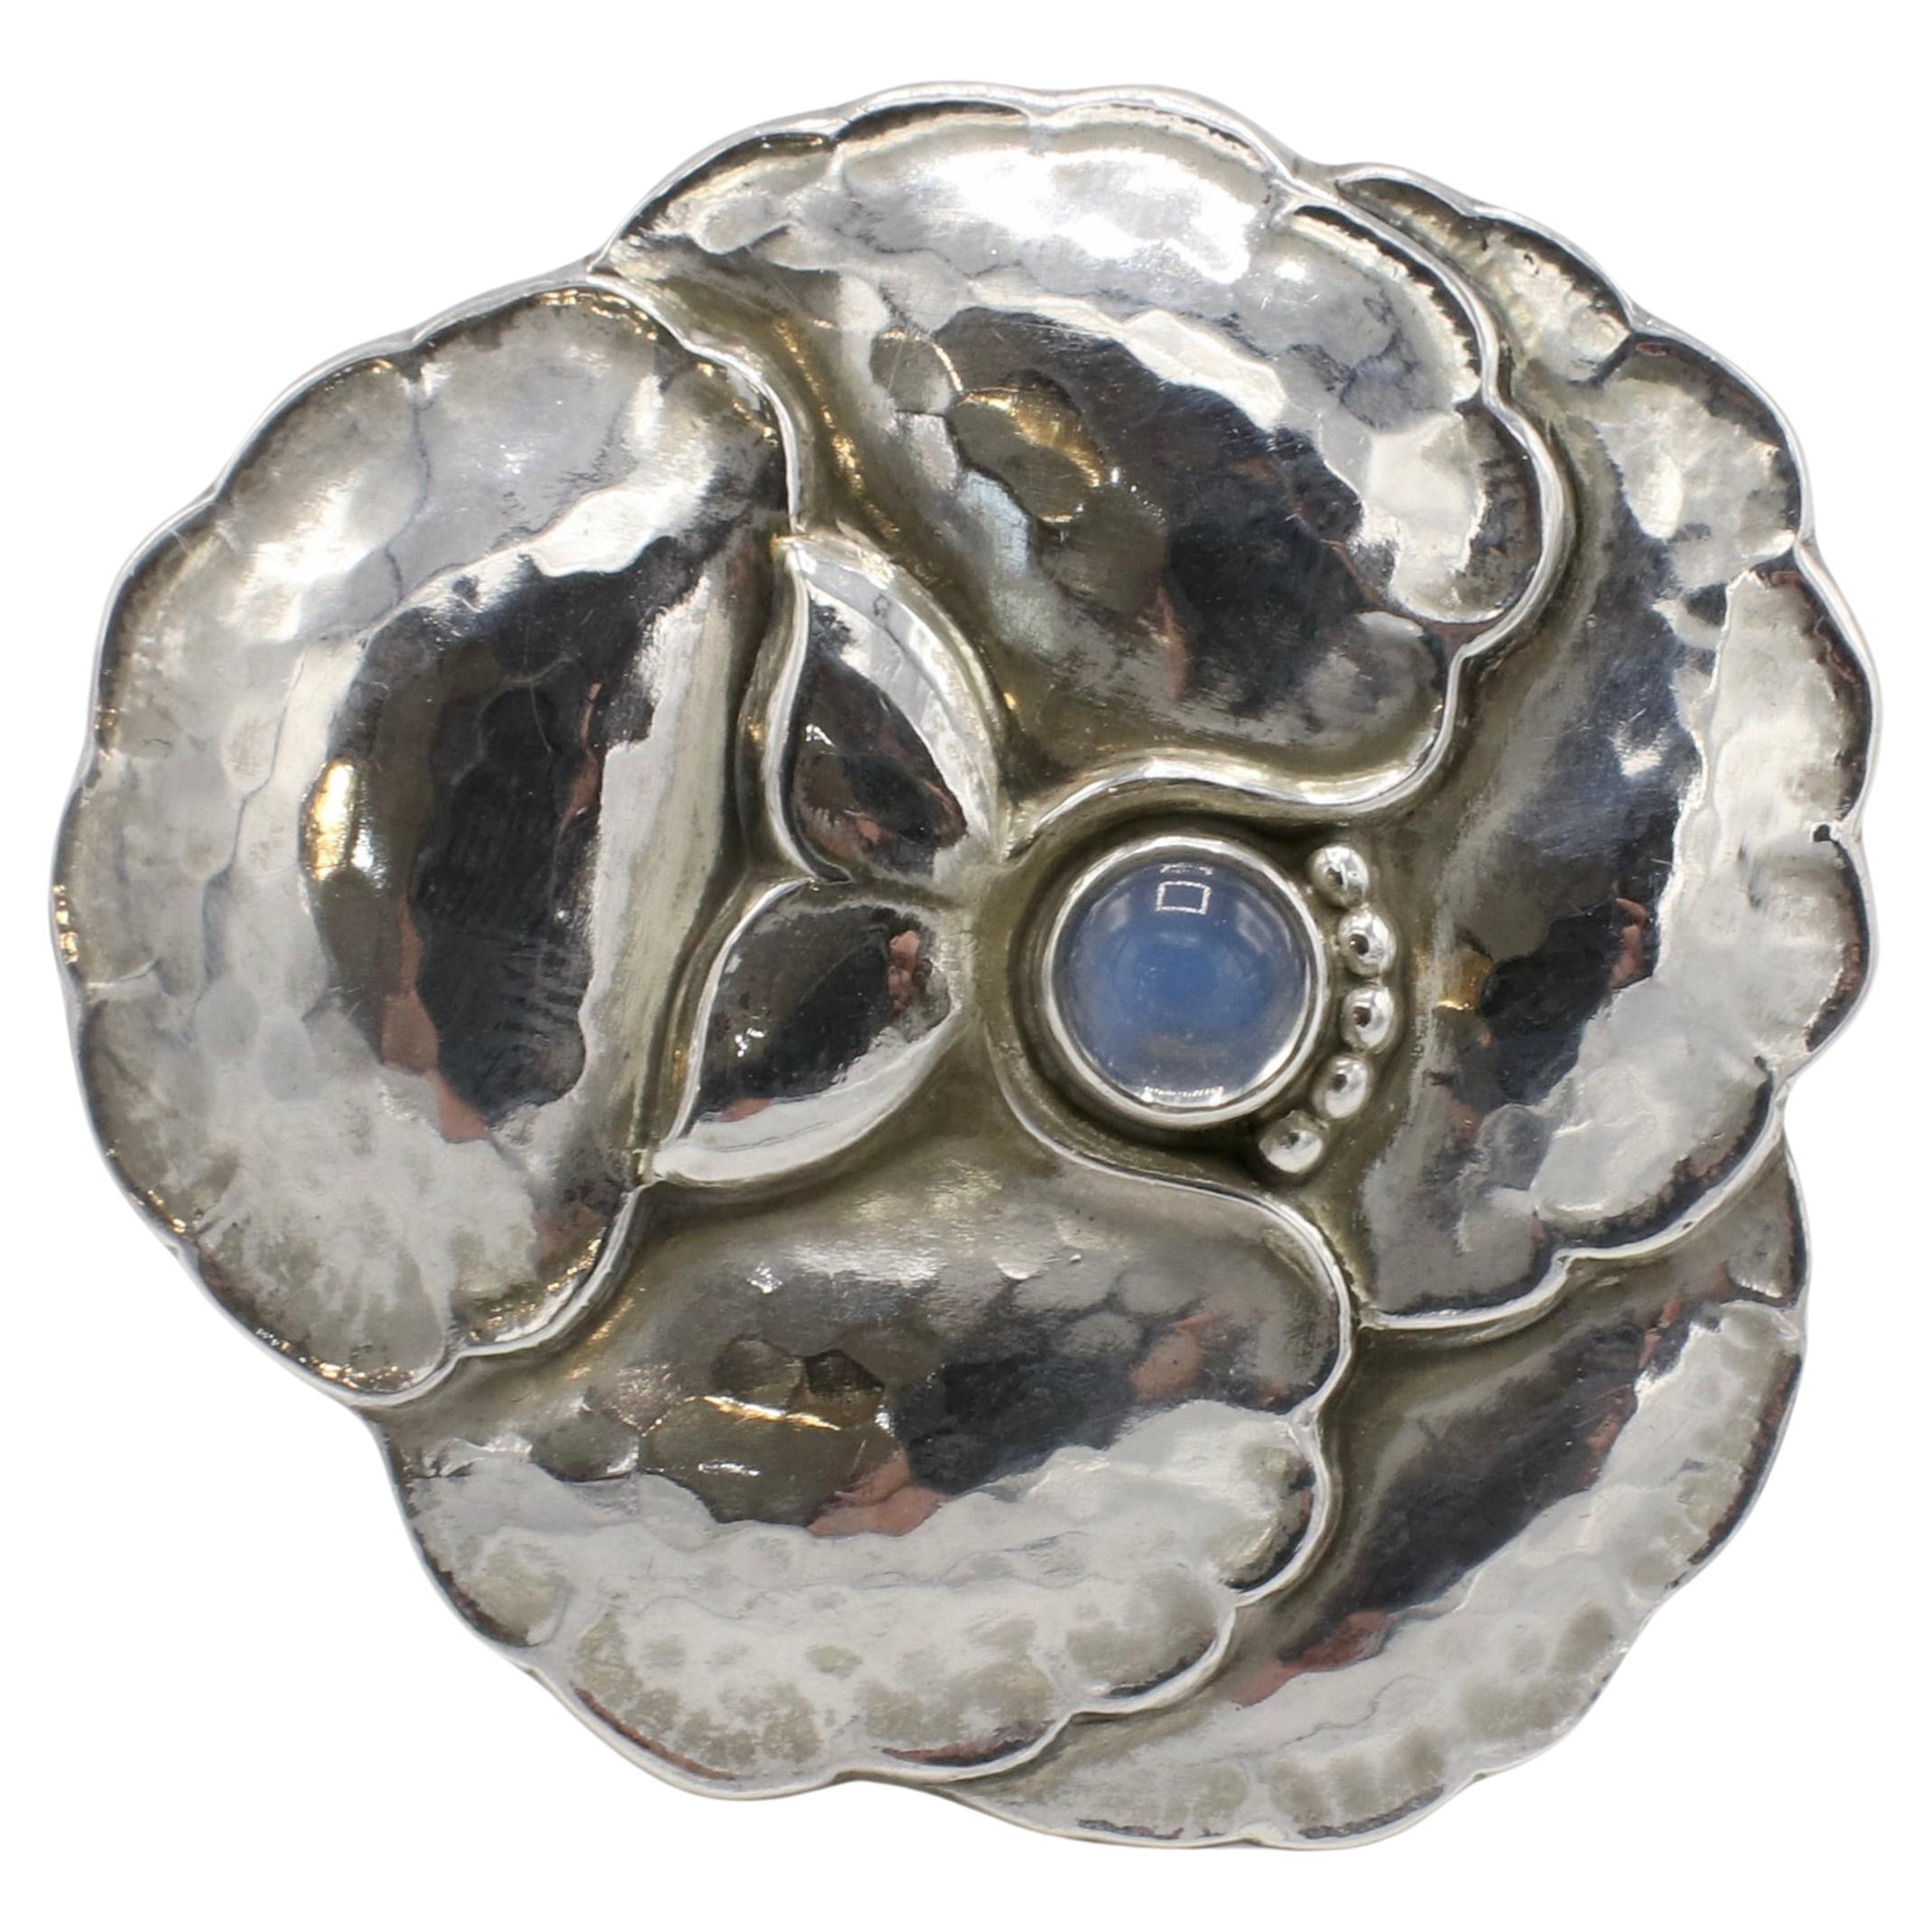 Georg Jensen Stelring Silver Pansy Flower Moonstone Brooch Pin 113 